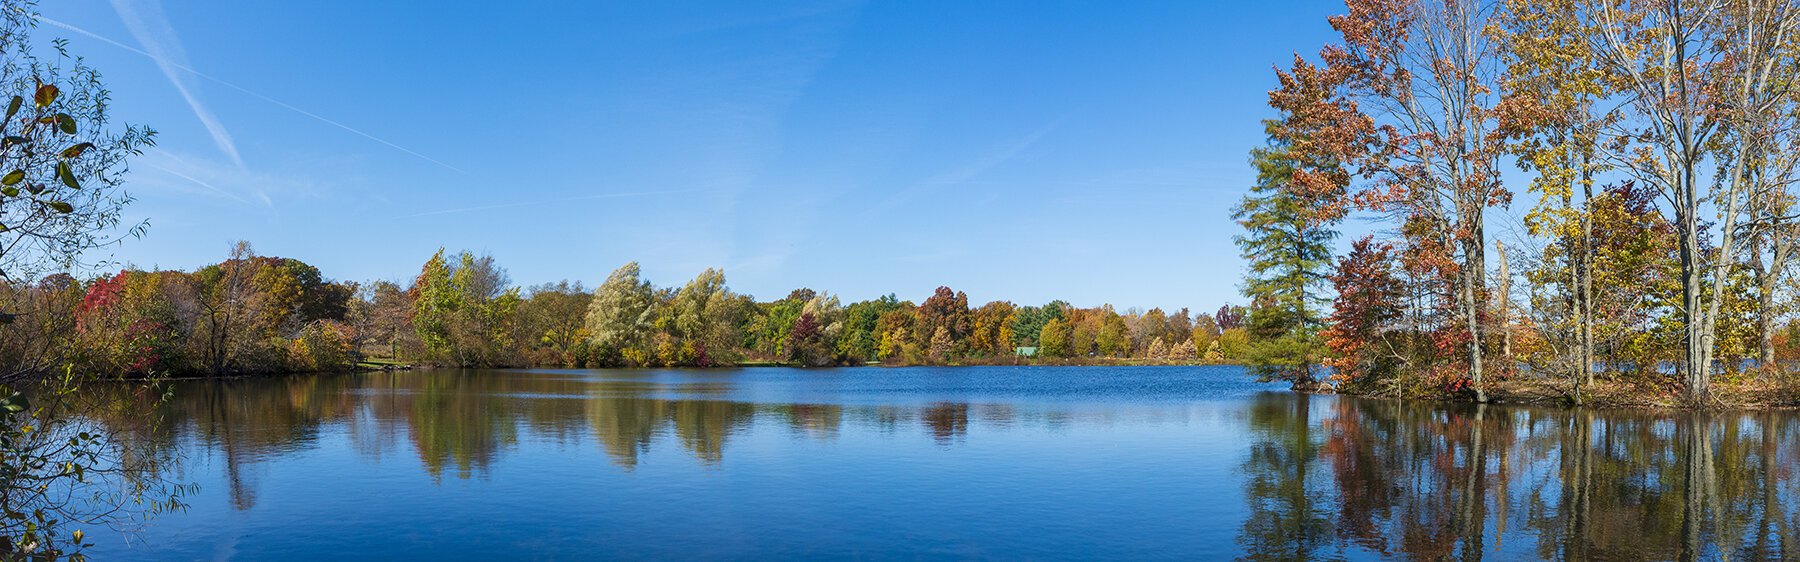 Corning Lake at Holden Arboretum